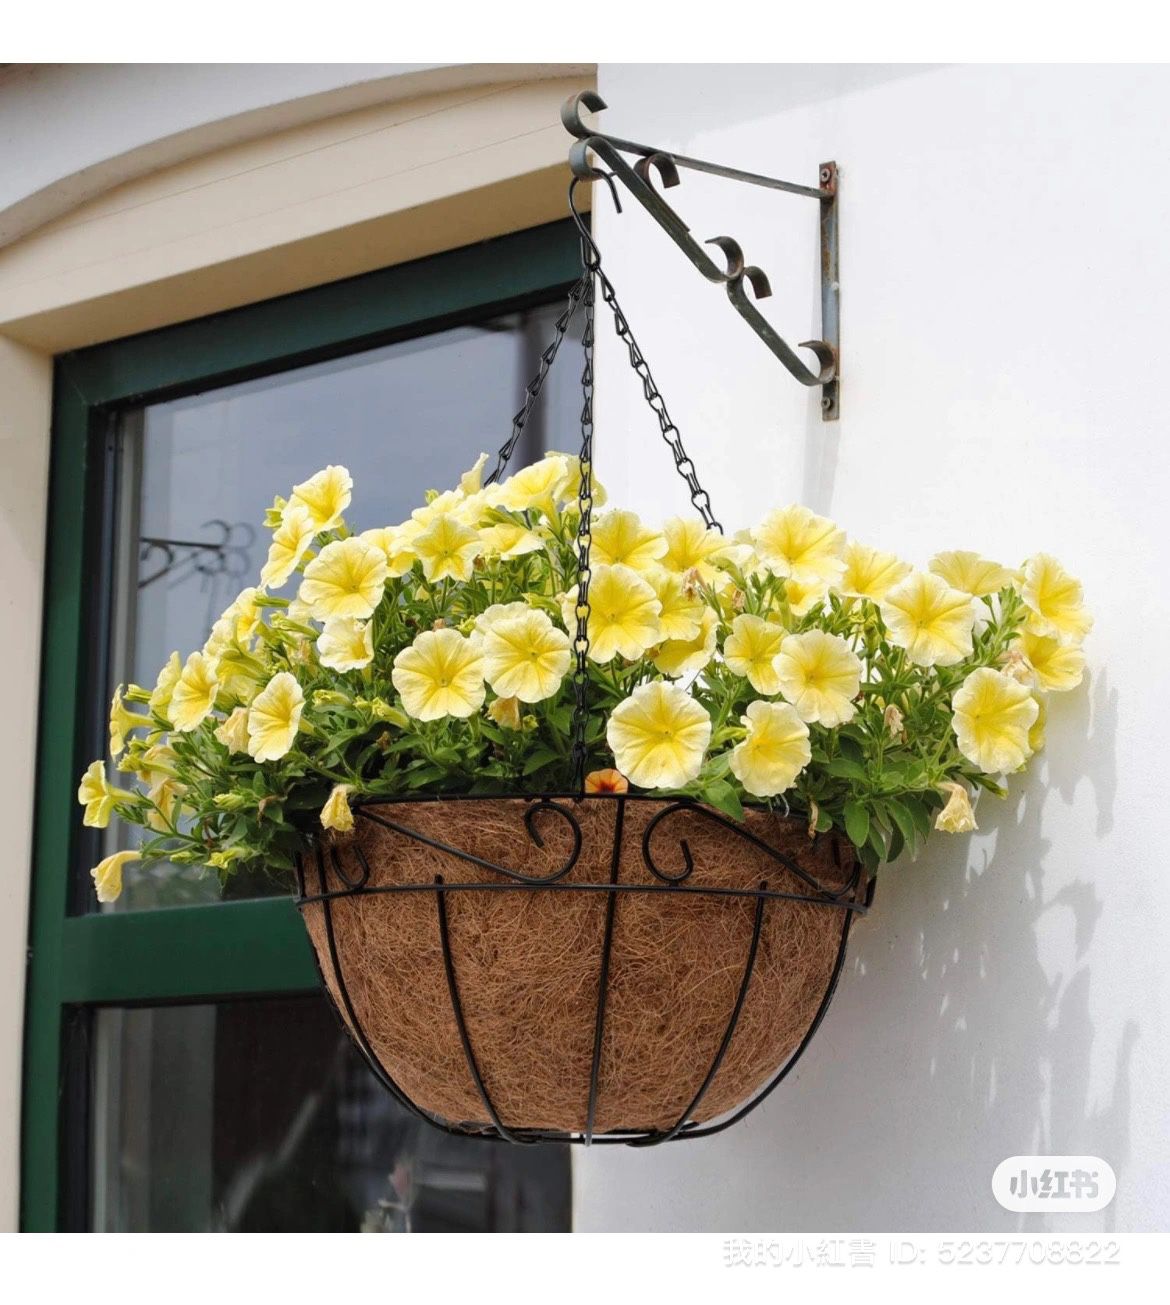 AMAGABELI GARDEN & HOME 4 Pack 14 Inch Hanging Baskets Planter for Flowers Round Outdoor Indoor Pots